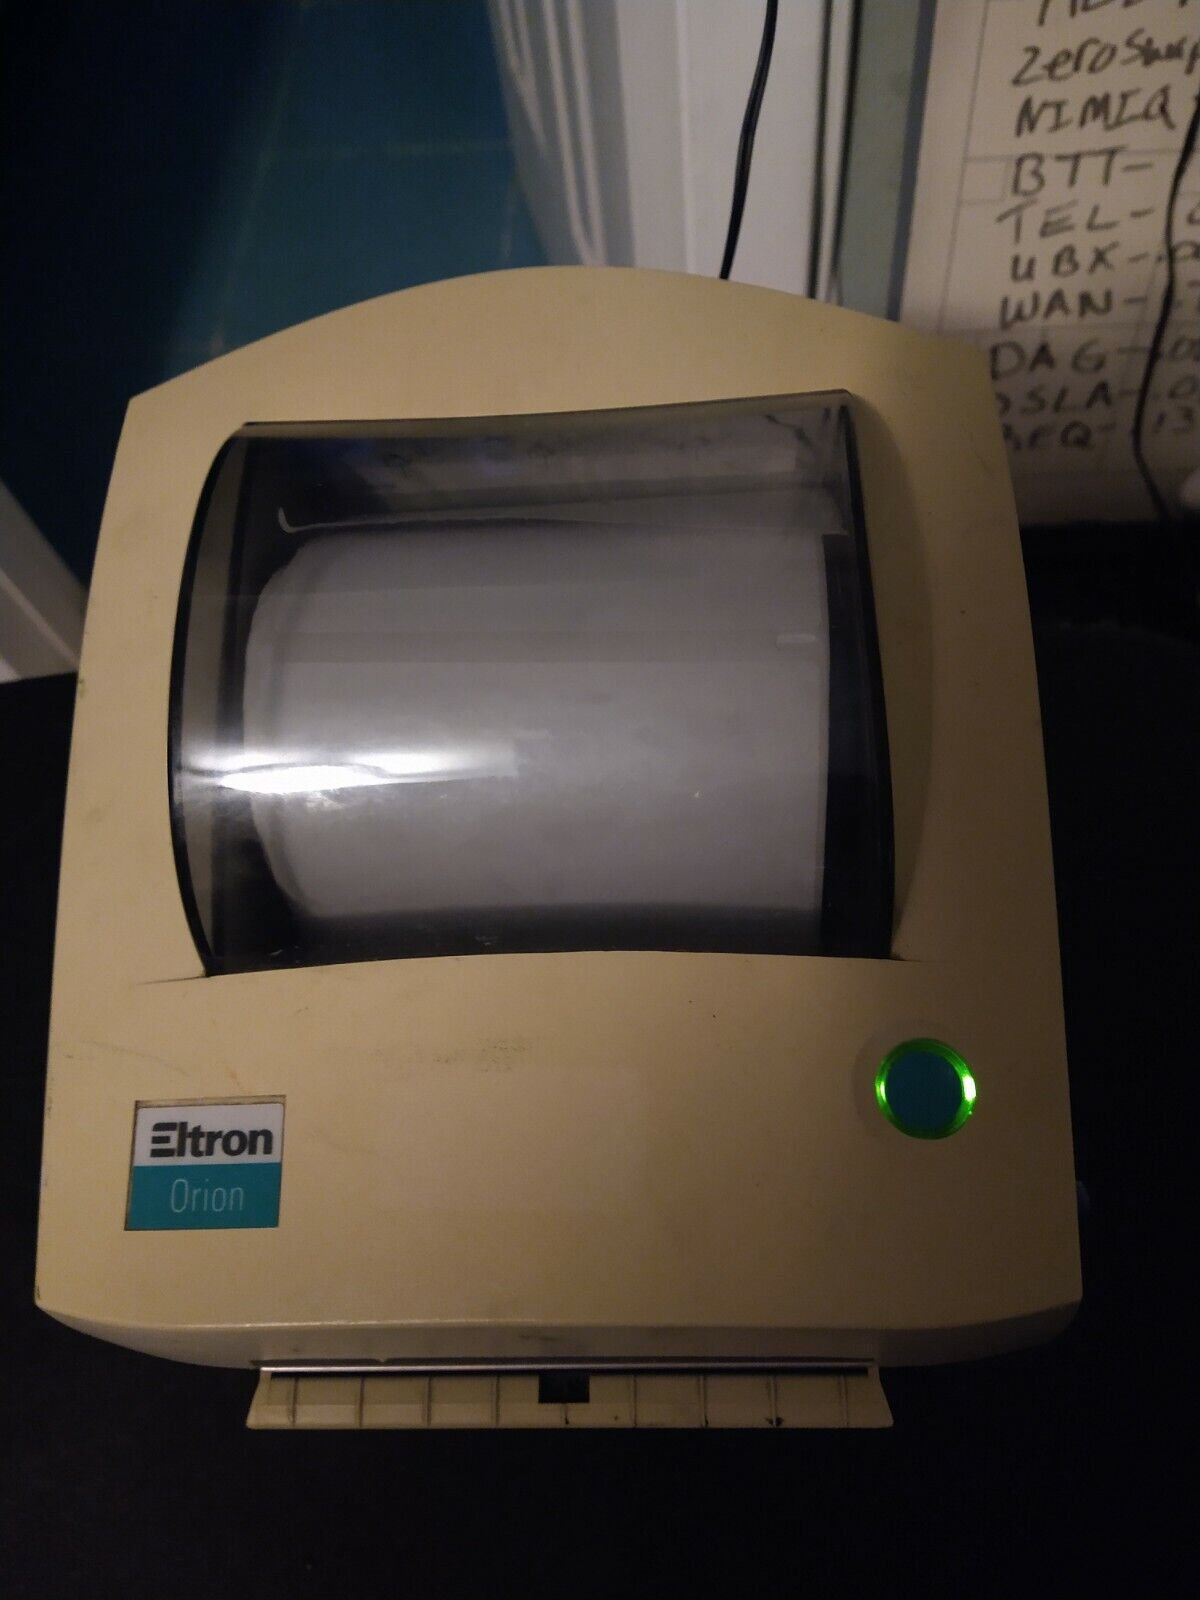 Eltron Orion FDX LP2443PSAT Direct Thermal Label Printer 120597-001 + AC Adapter